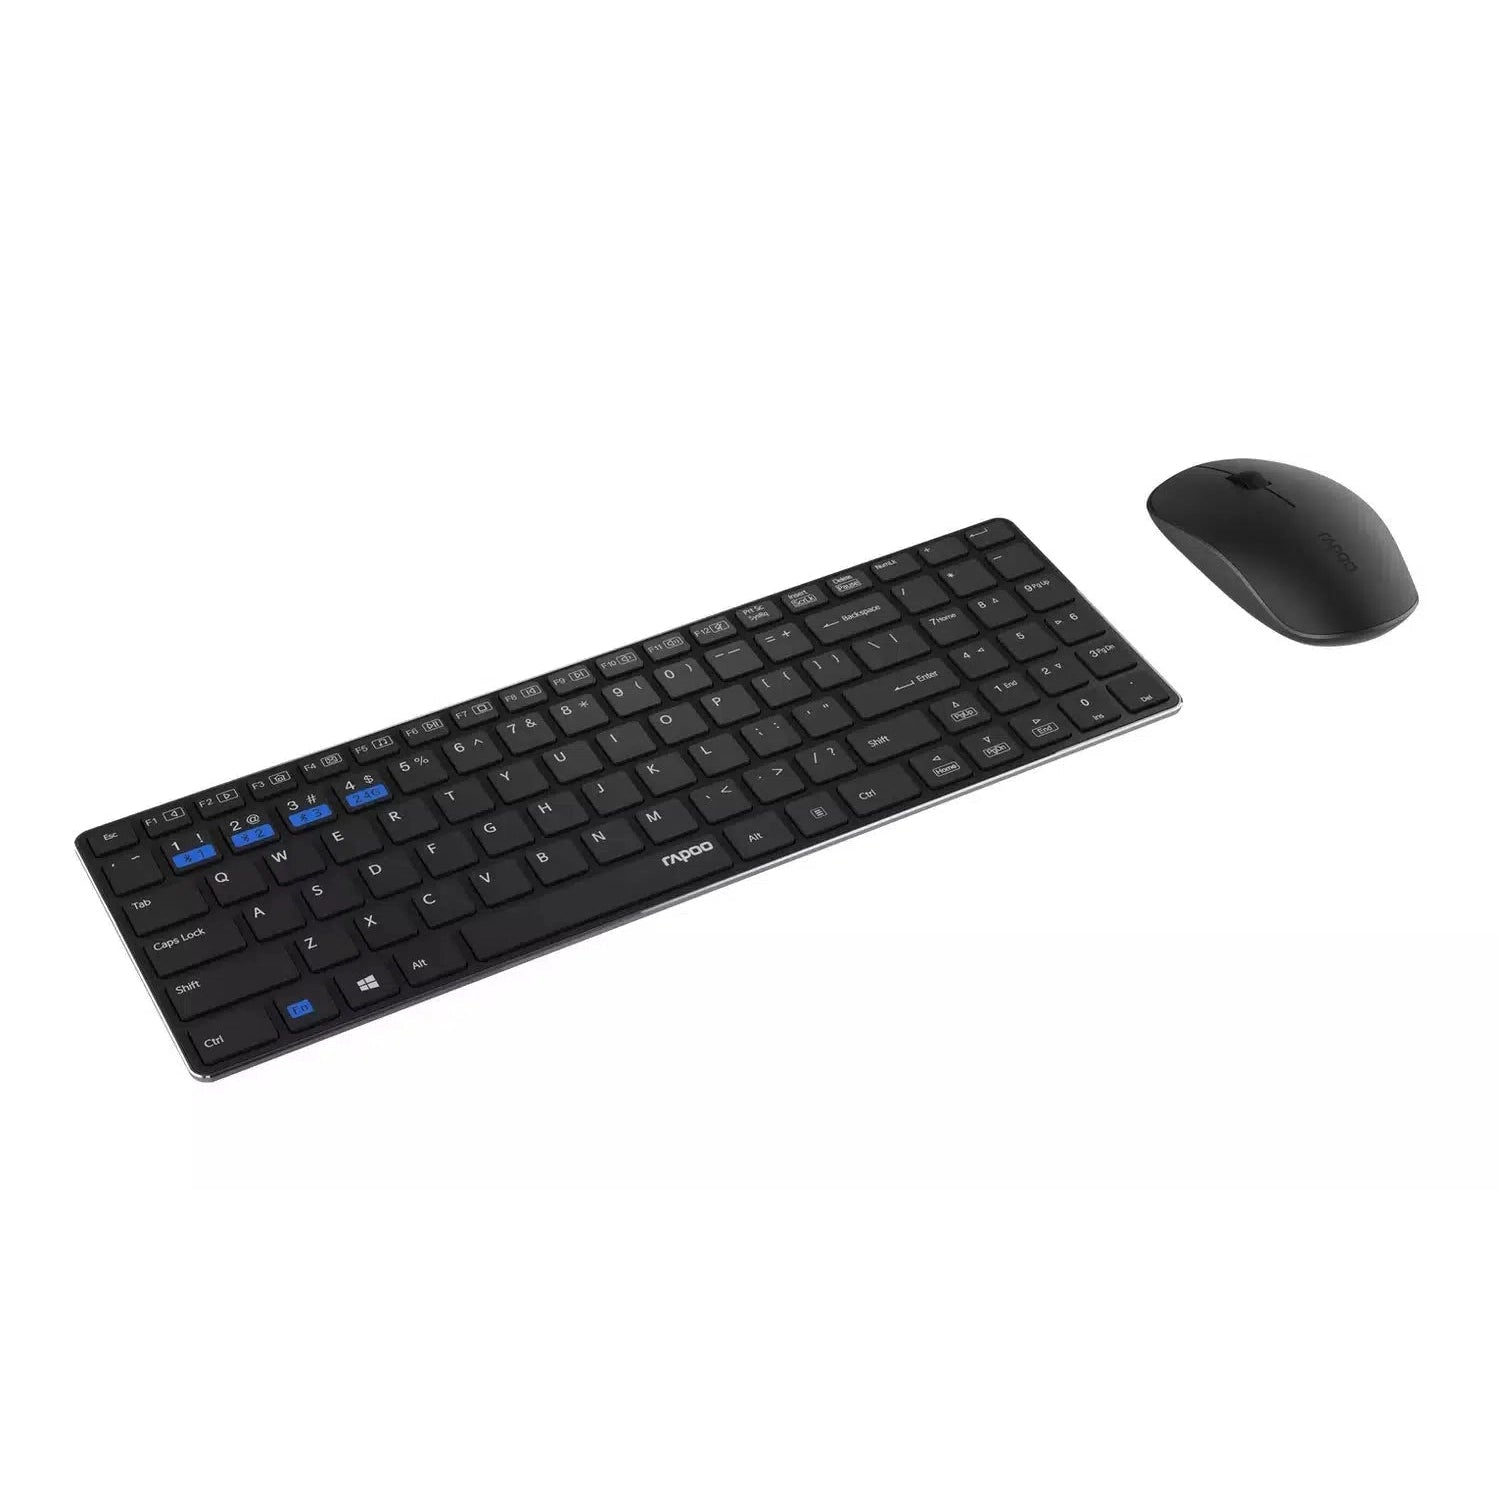 Rapoo 9300M Wireless Keyboard & Mouse Set, Black - Refurbished Good